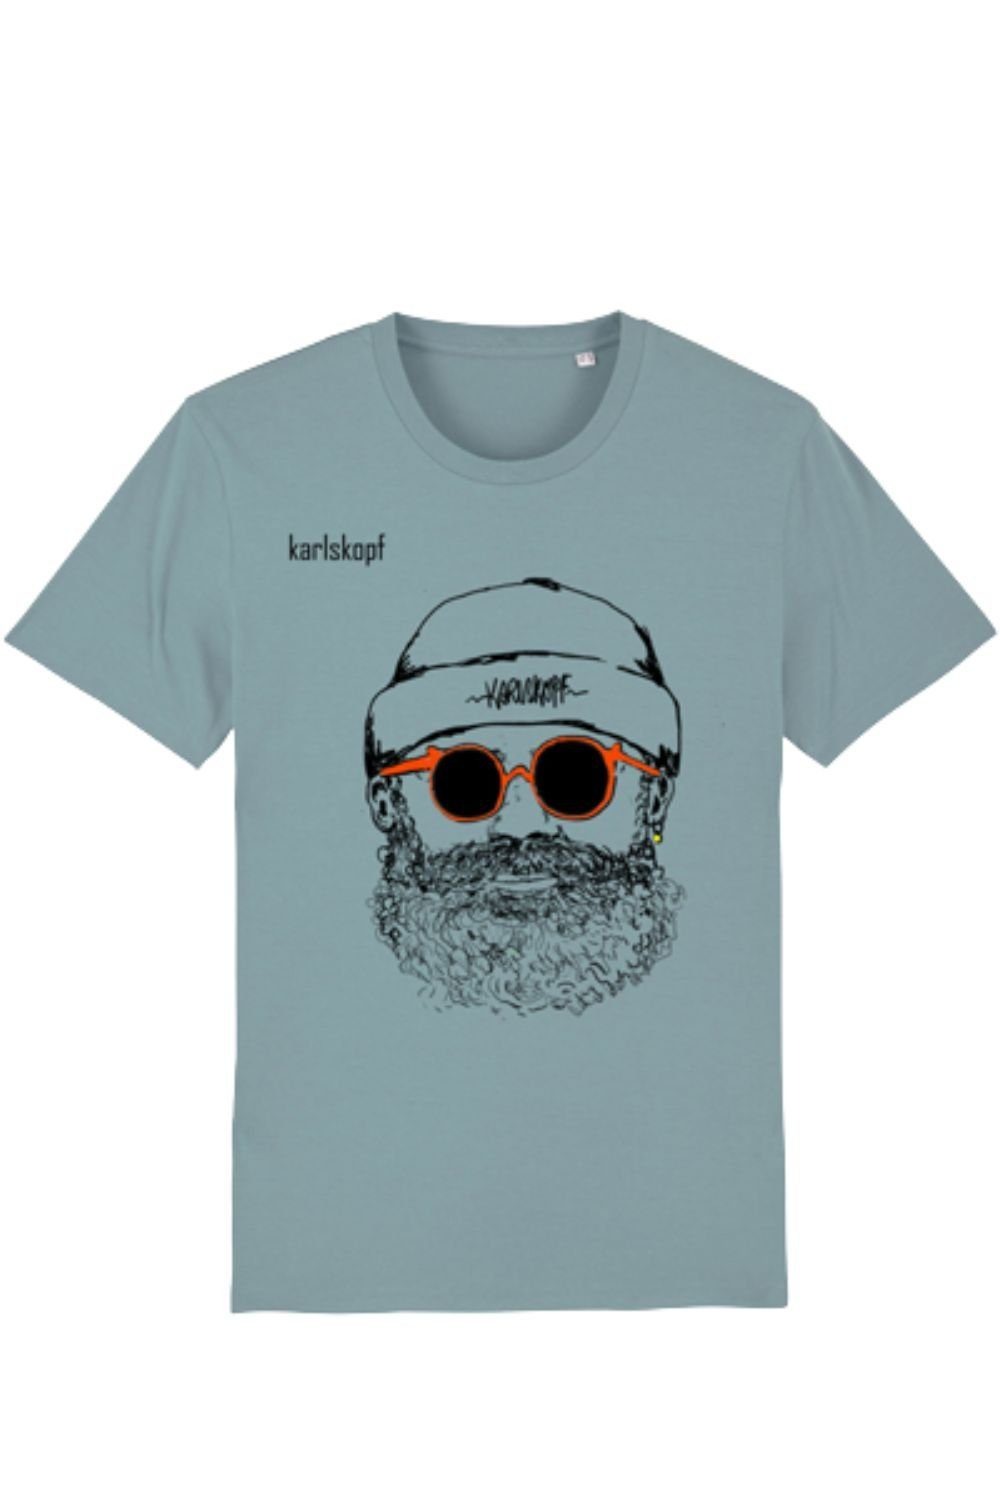 Rundhalsshirt Erdblau karlskopf Print-Shirt Basic HIPSTER